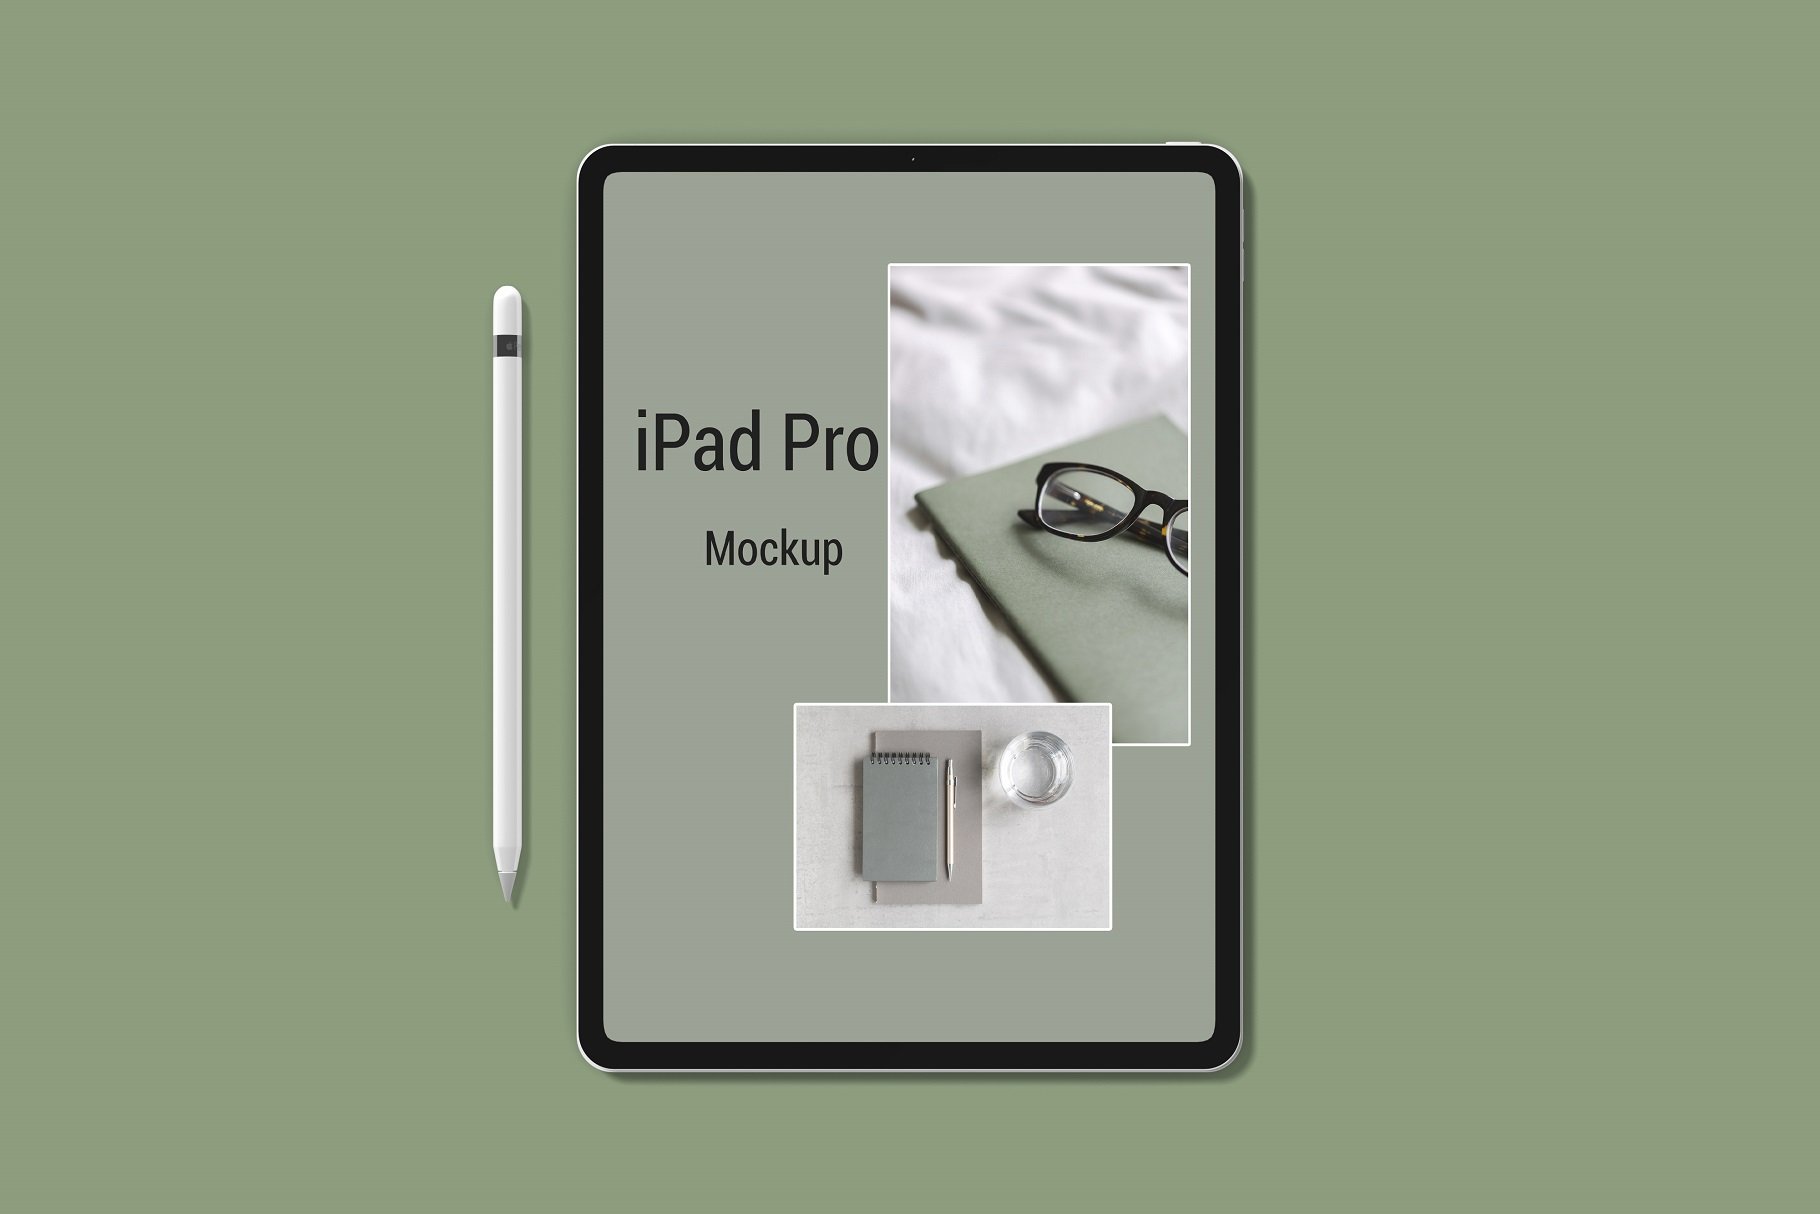 iPad Pro Mockup preview image.